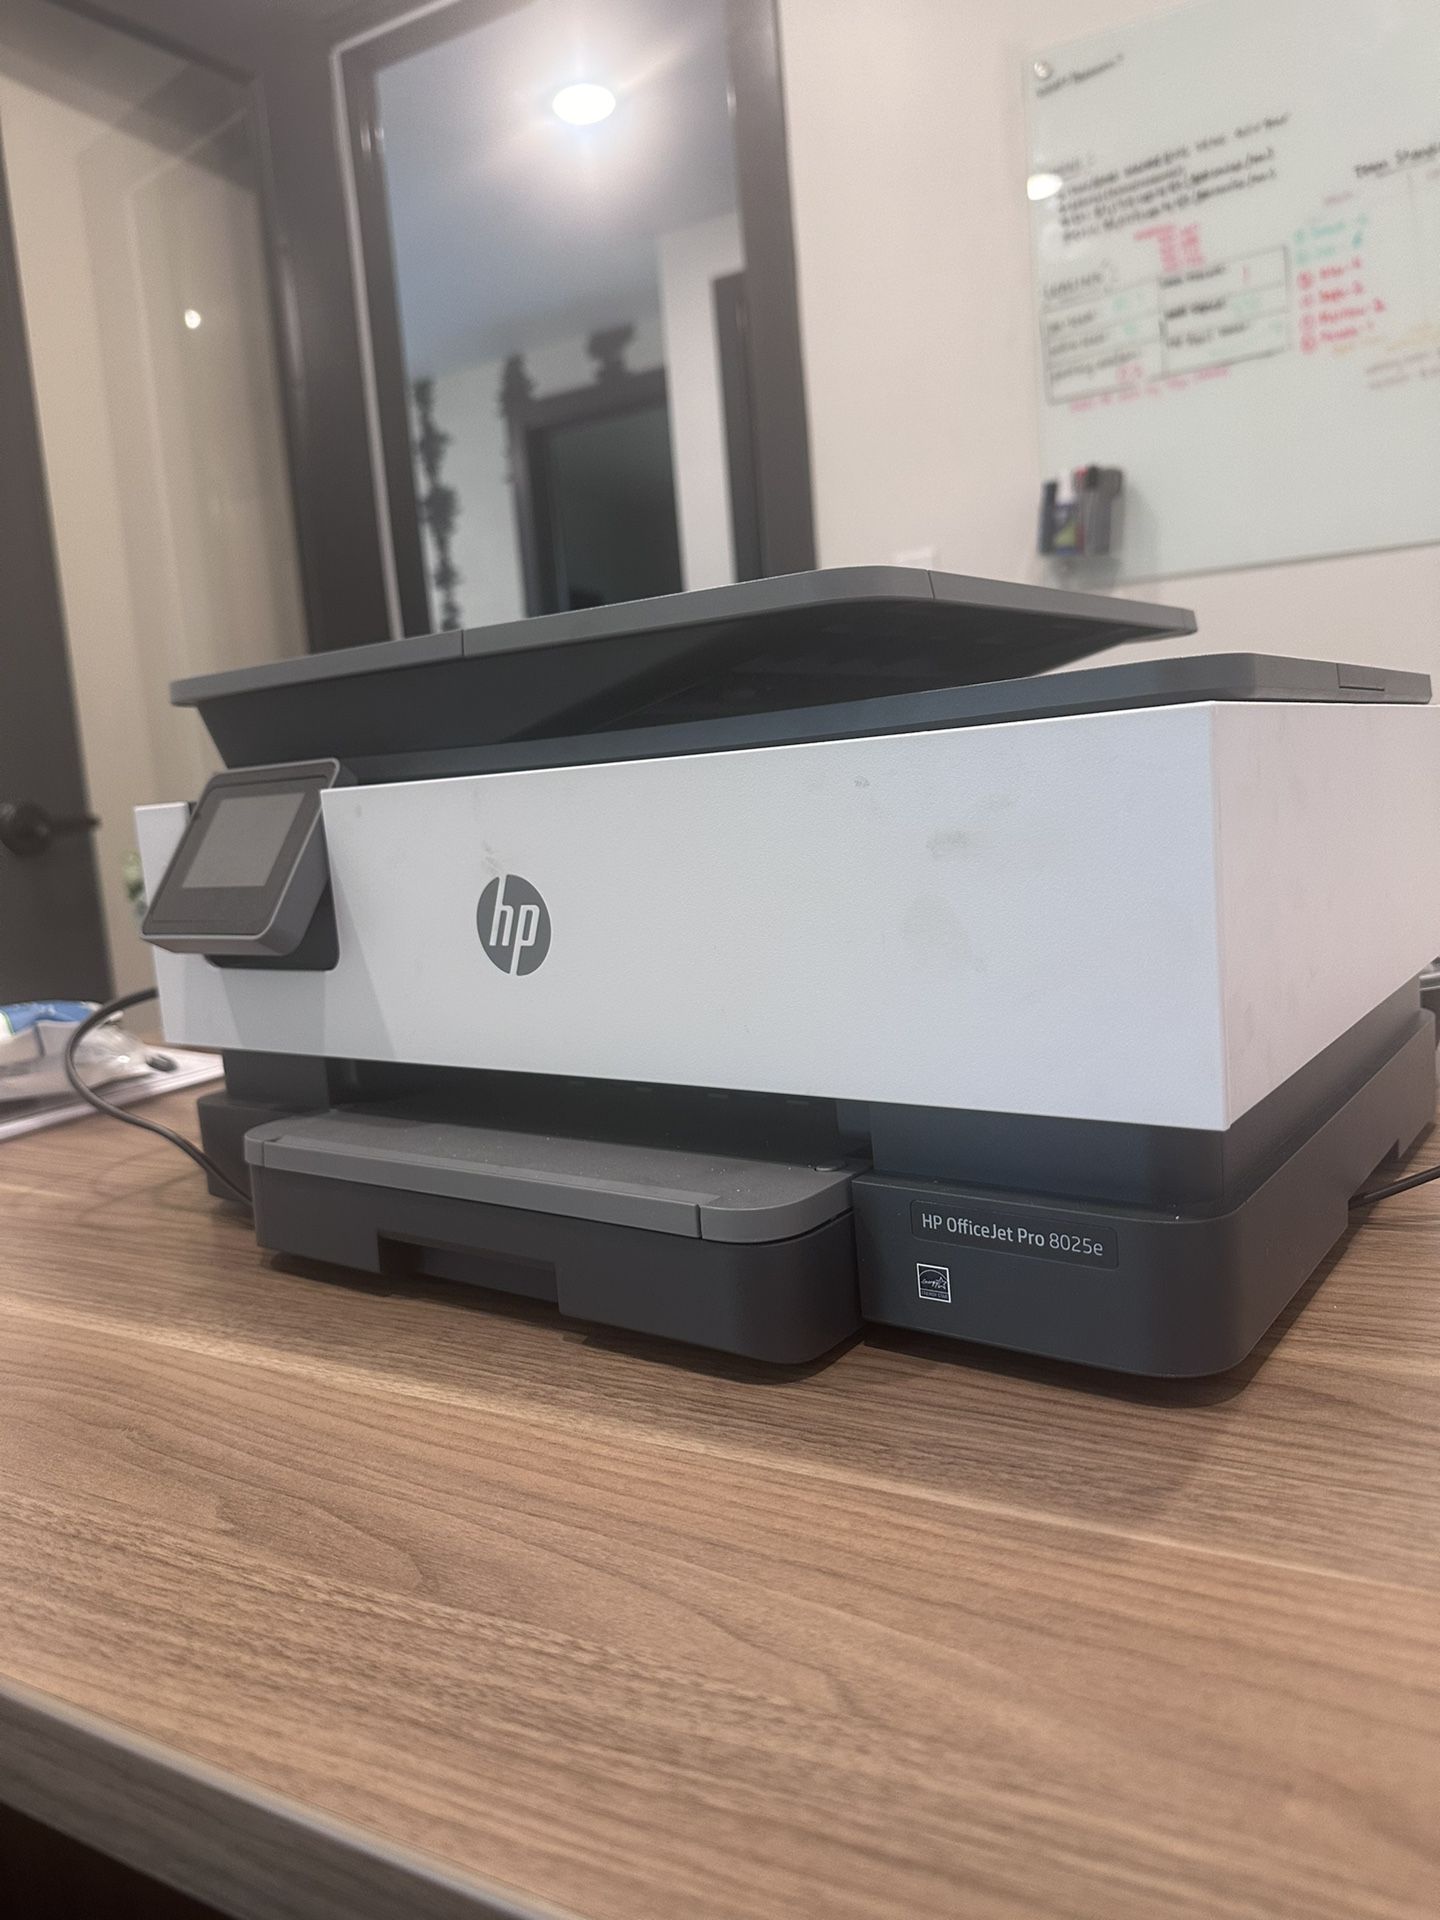 hp printer like new 